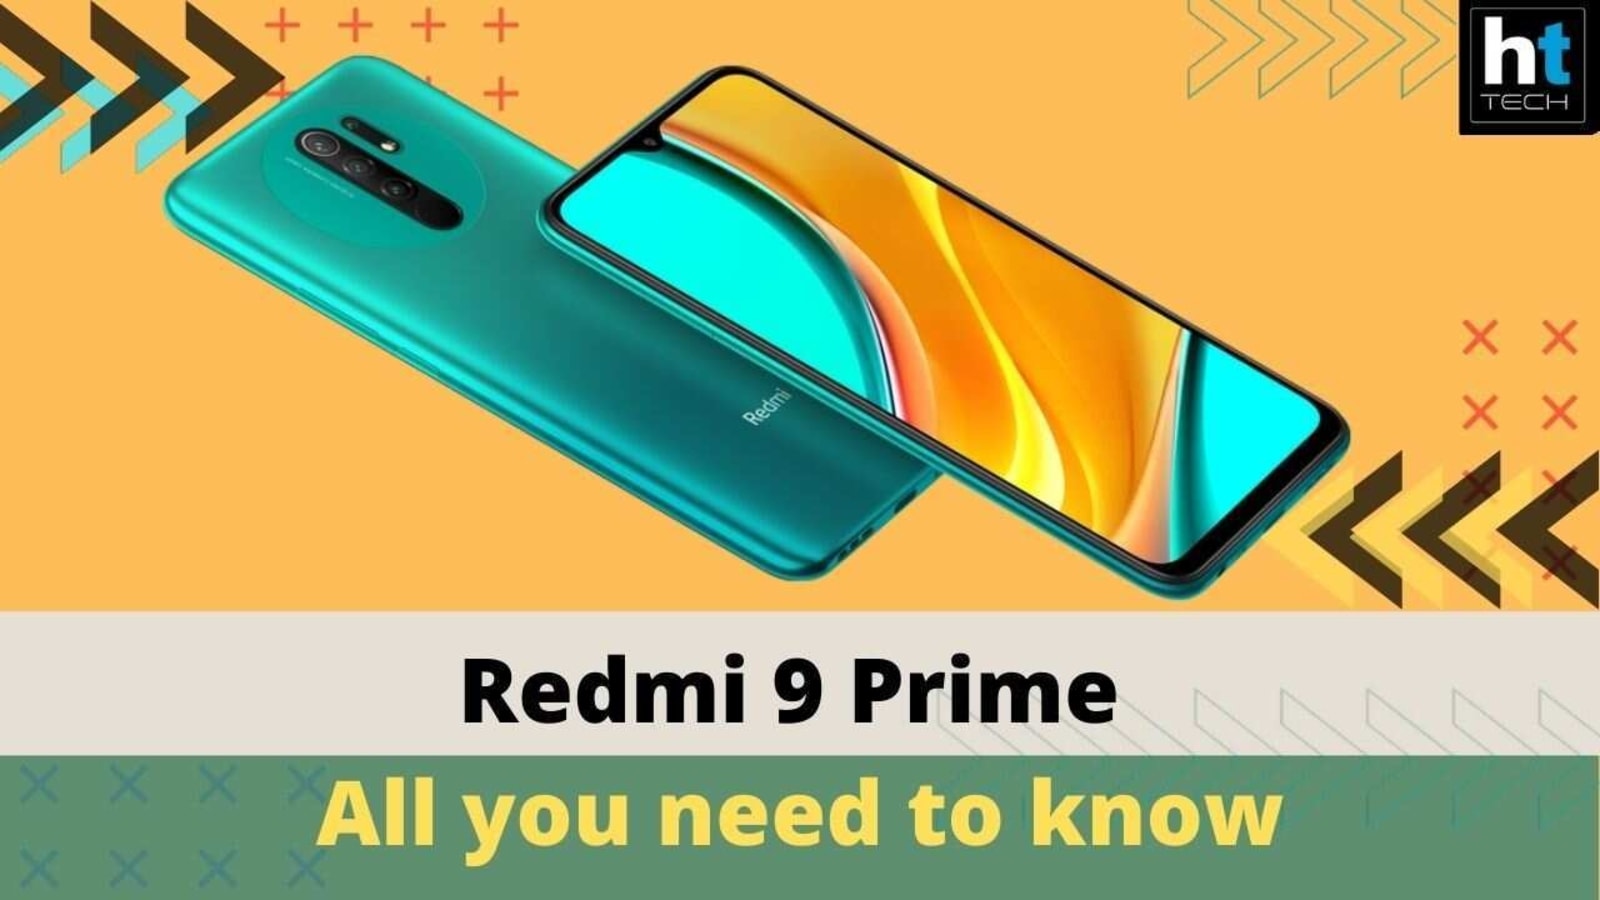 Redmi 9 Prime @₹9,999 - Prime Time All-rounder - Mi India